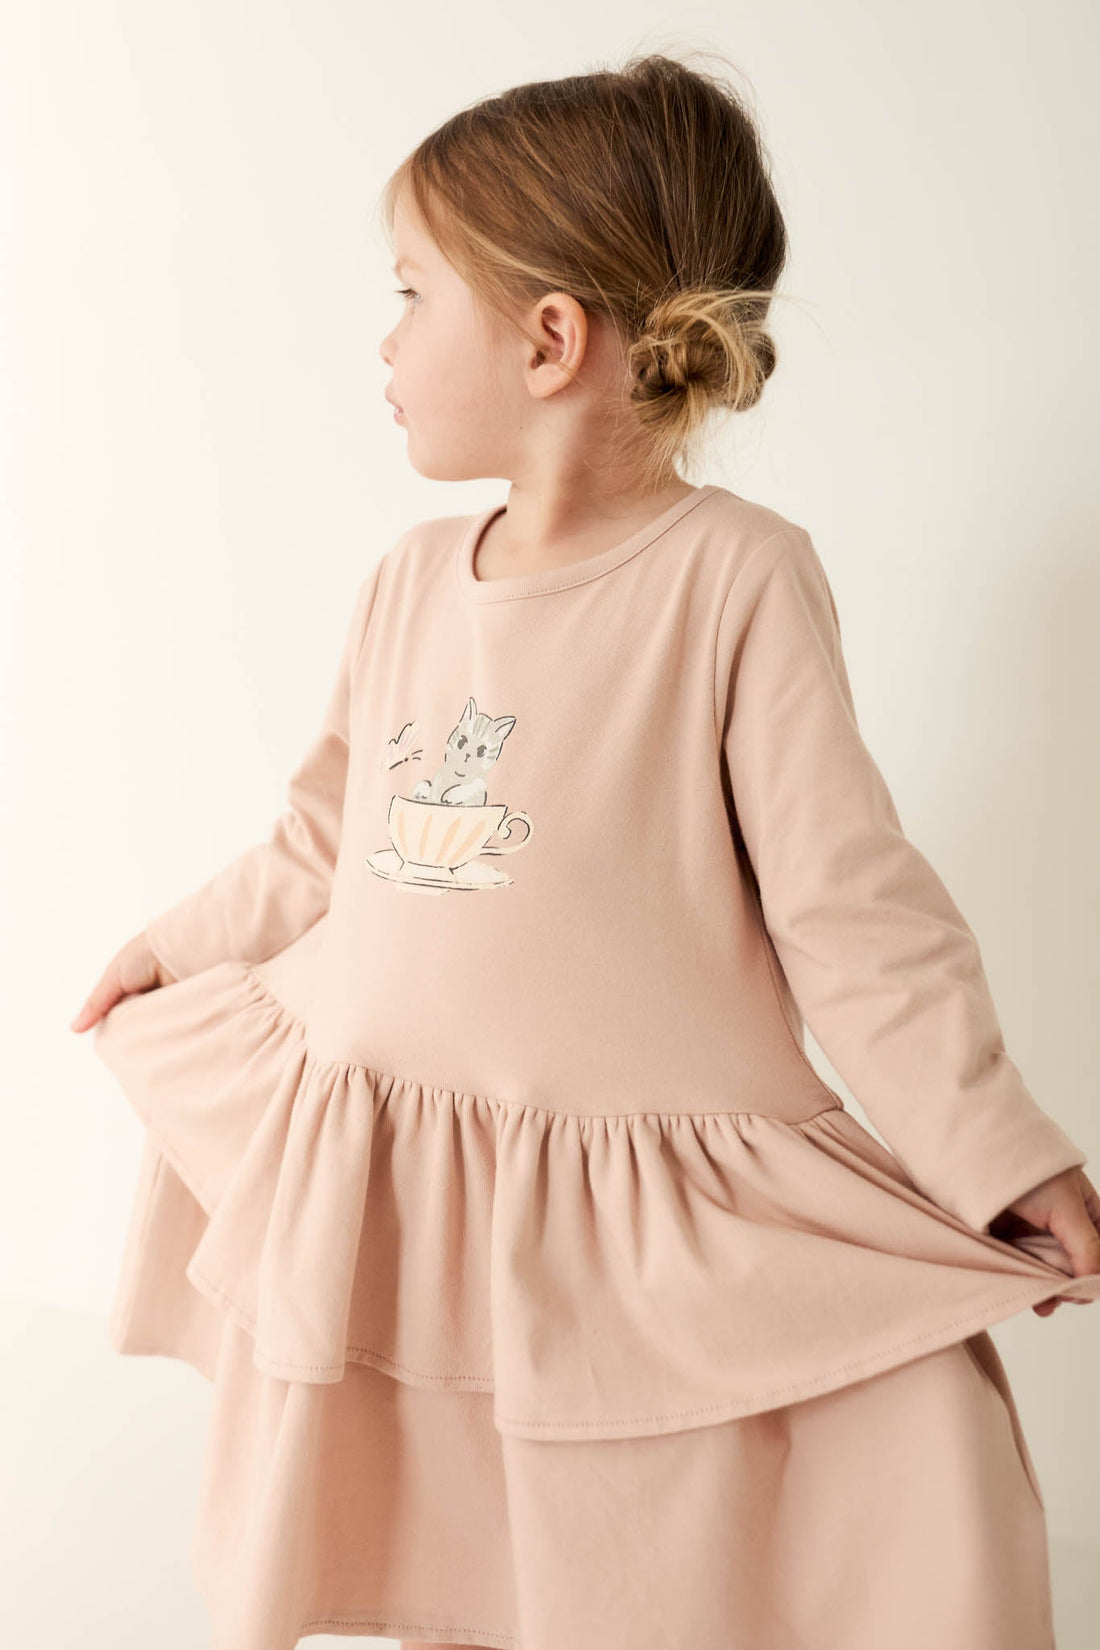 Organic Cotton Fayette Dress - Dusky Rose Childrens Dress from Jamie Kay USA